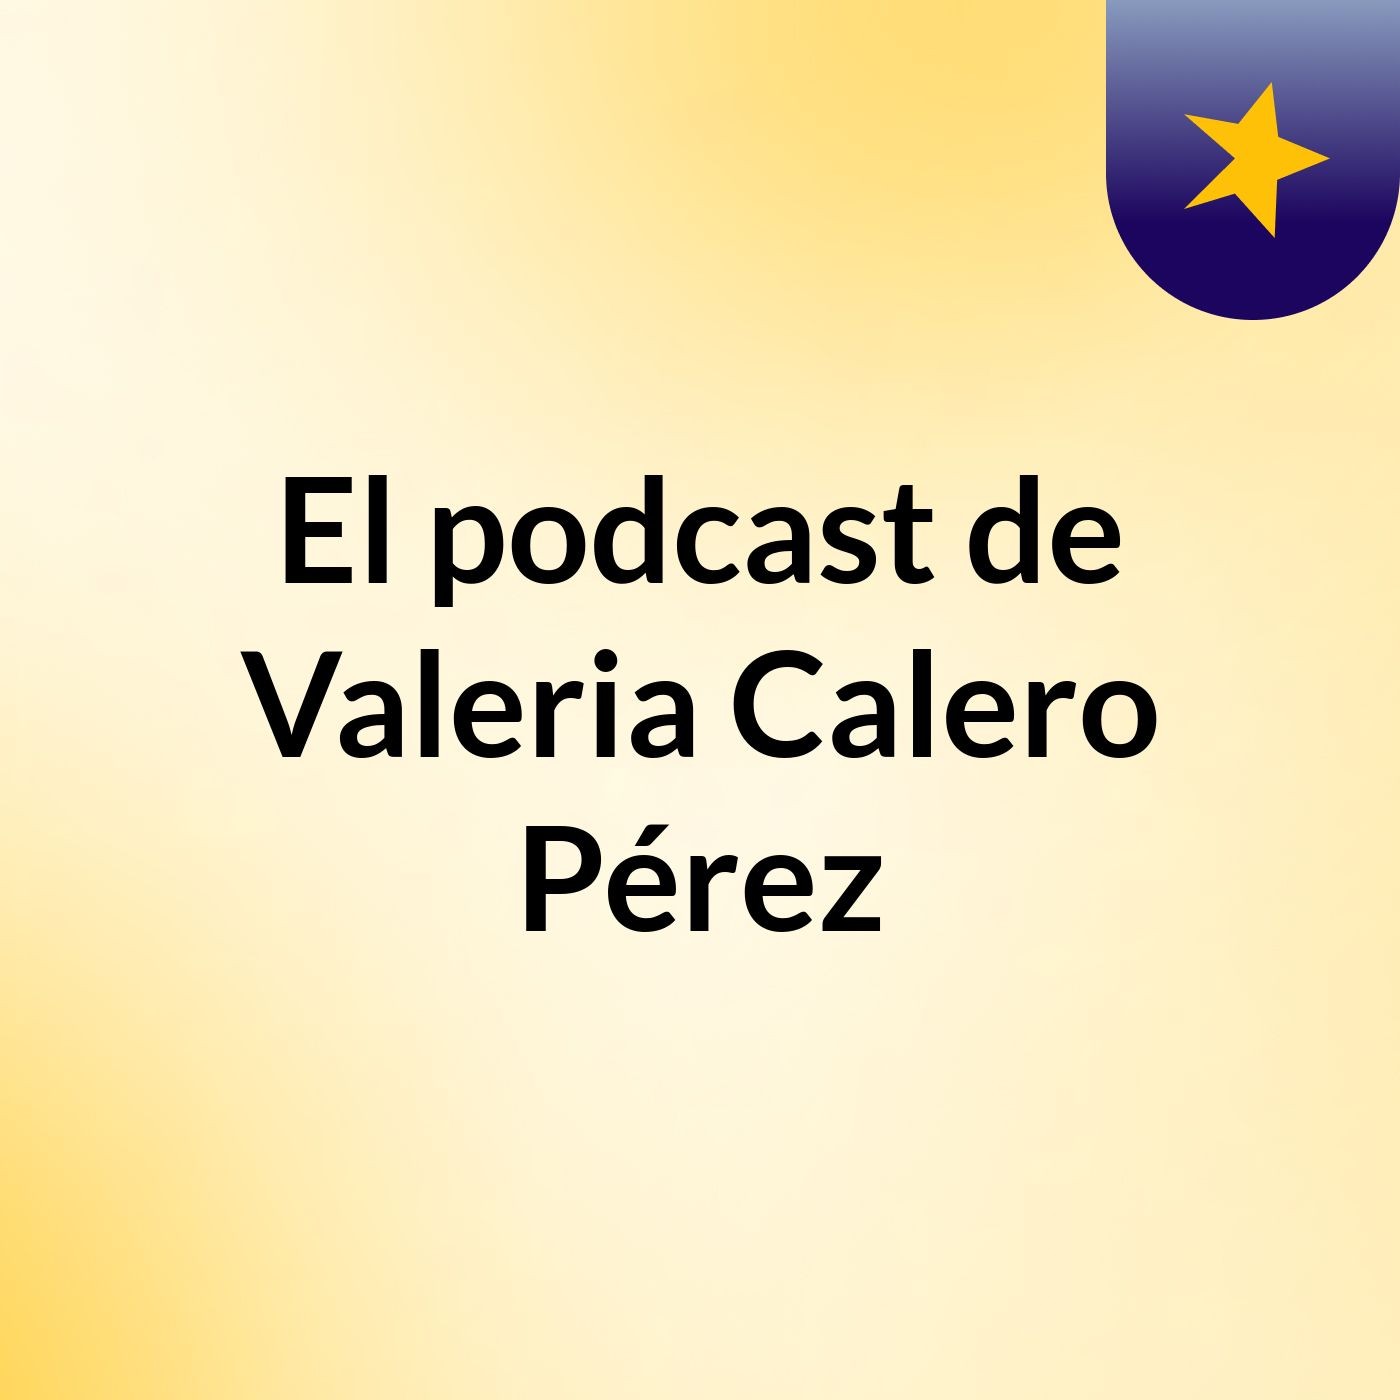 El podcast de Valeria Calero Pérez